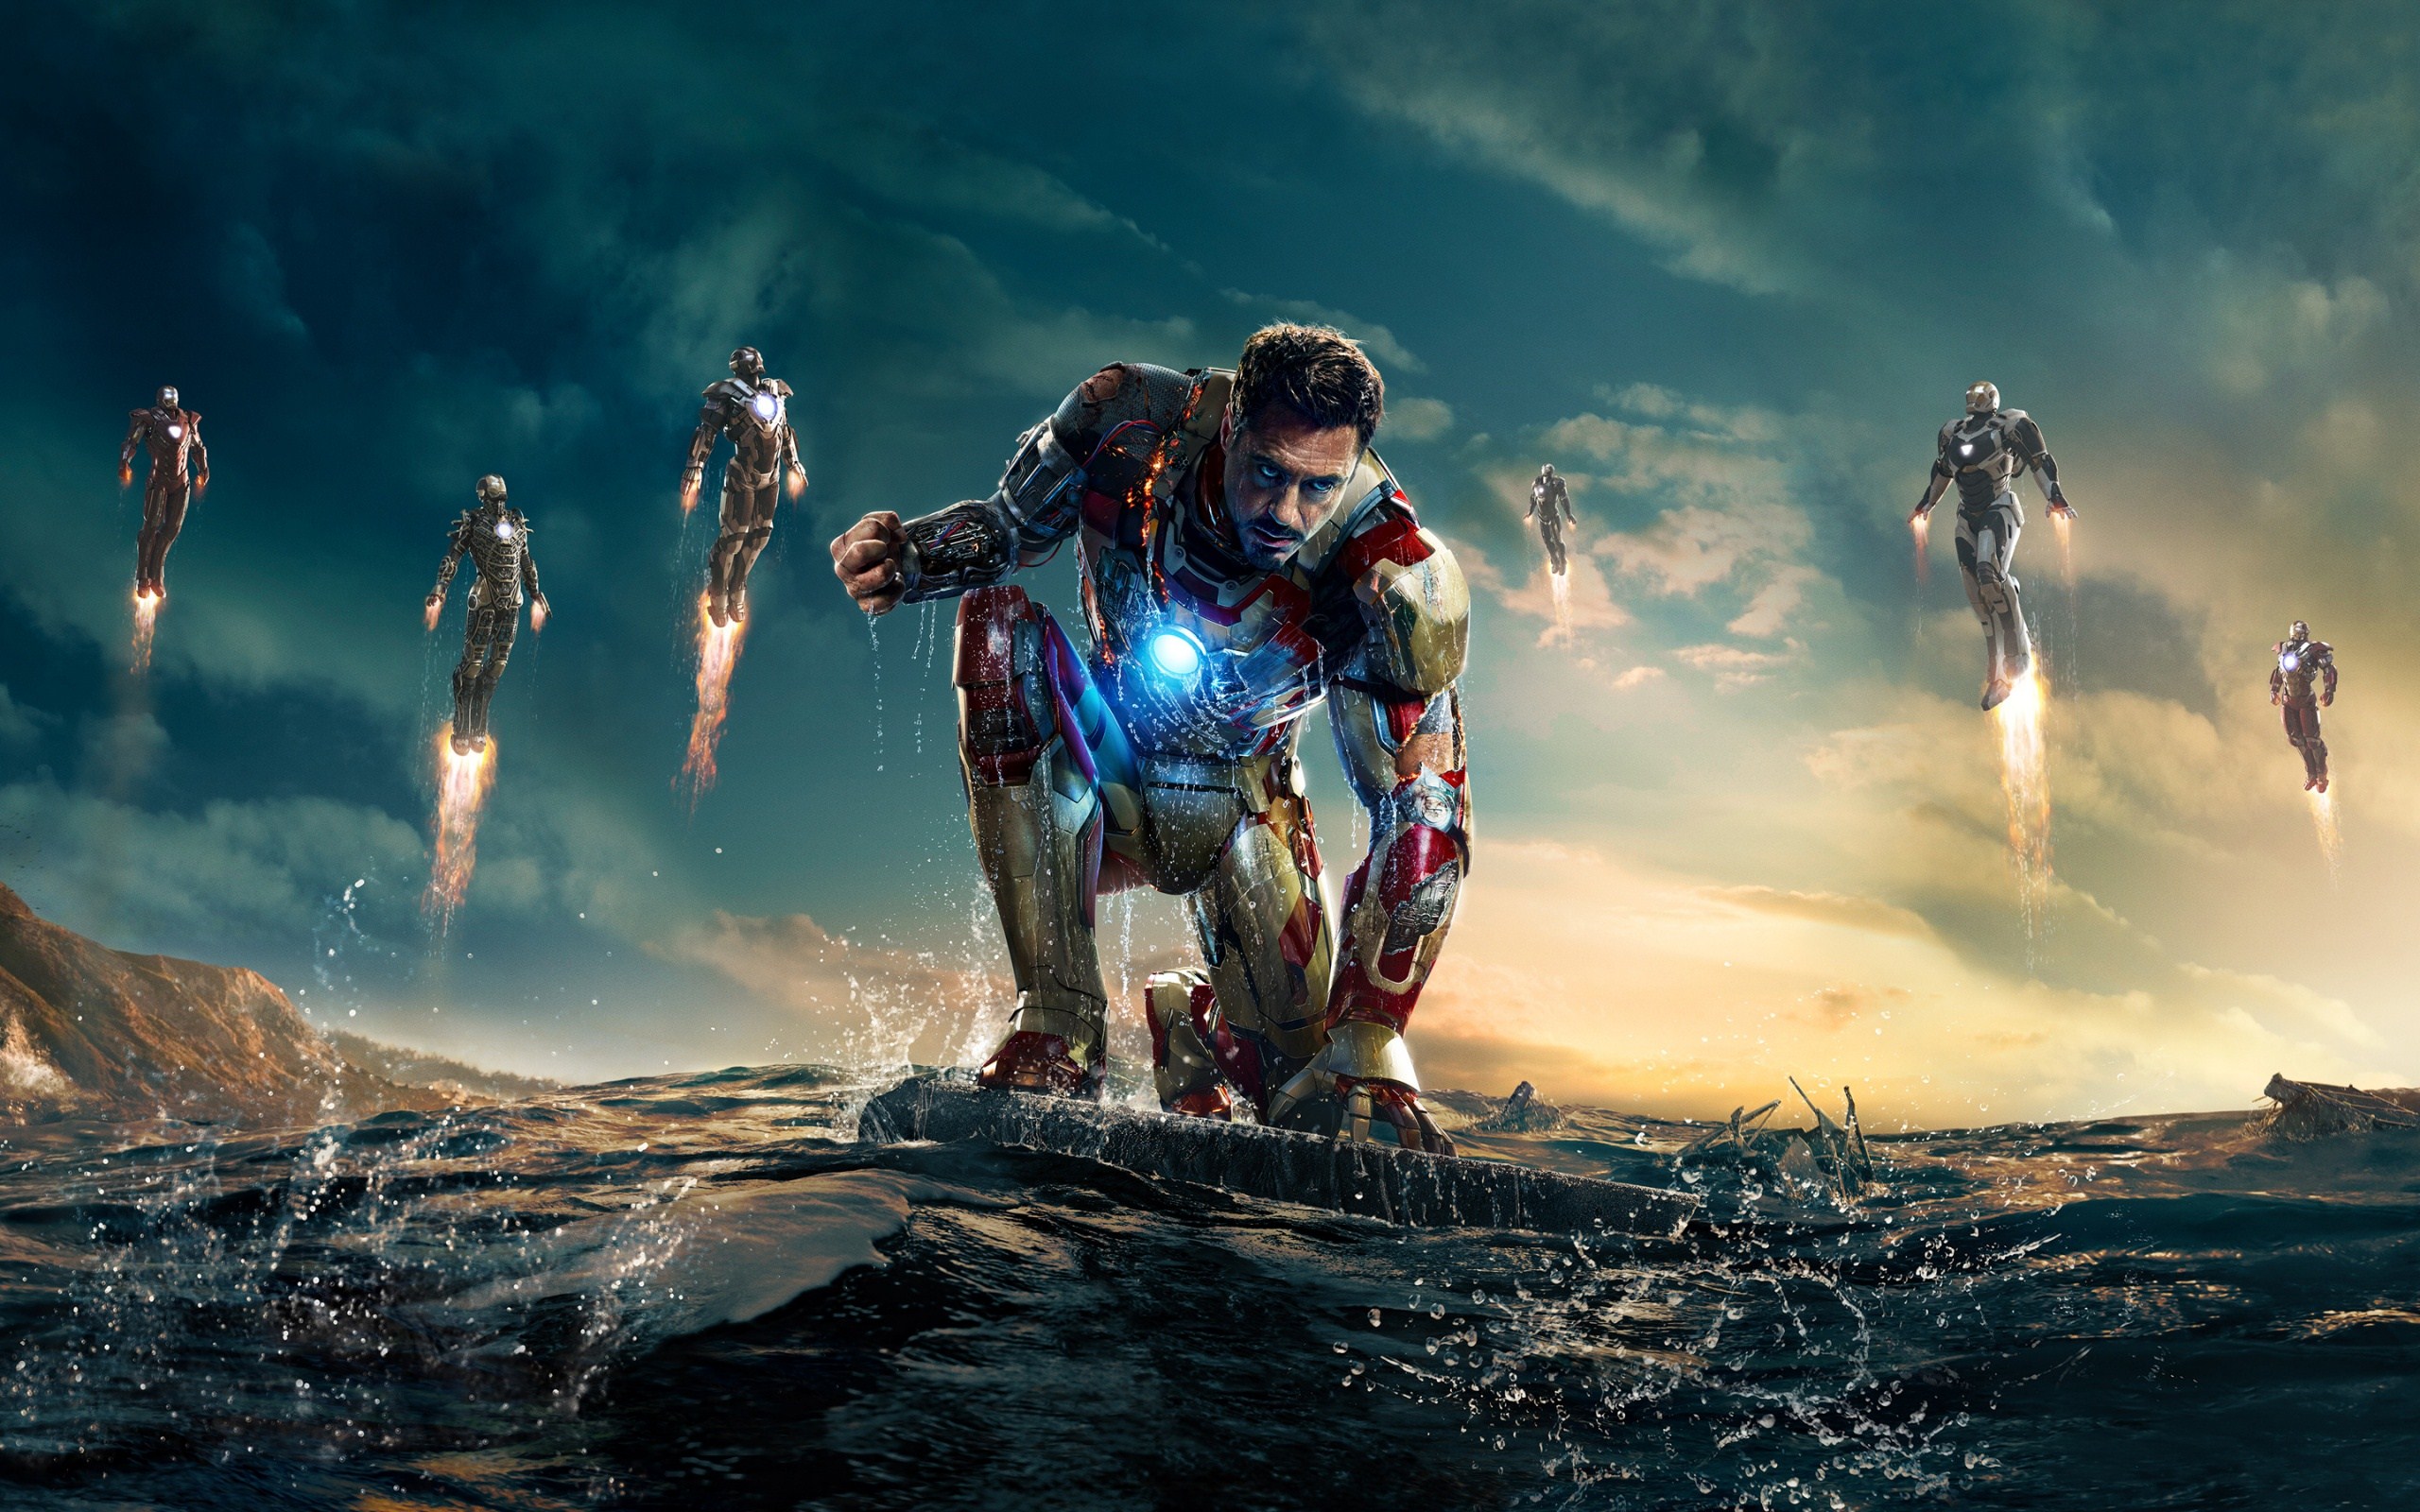 Iron Man Movie Poster Wallpaper